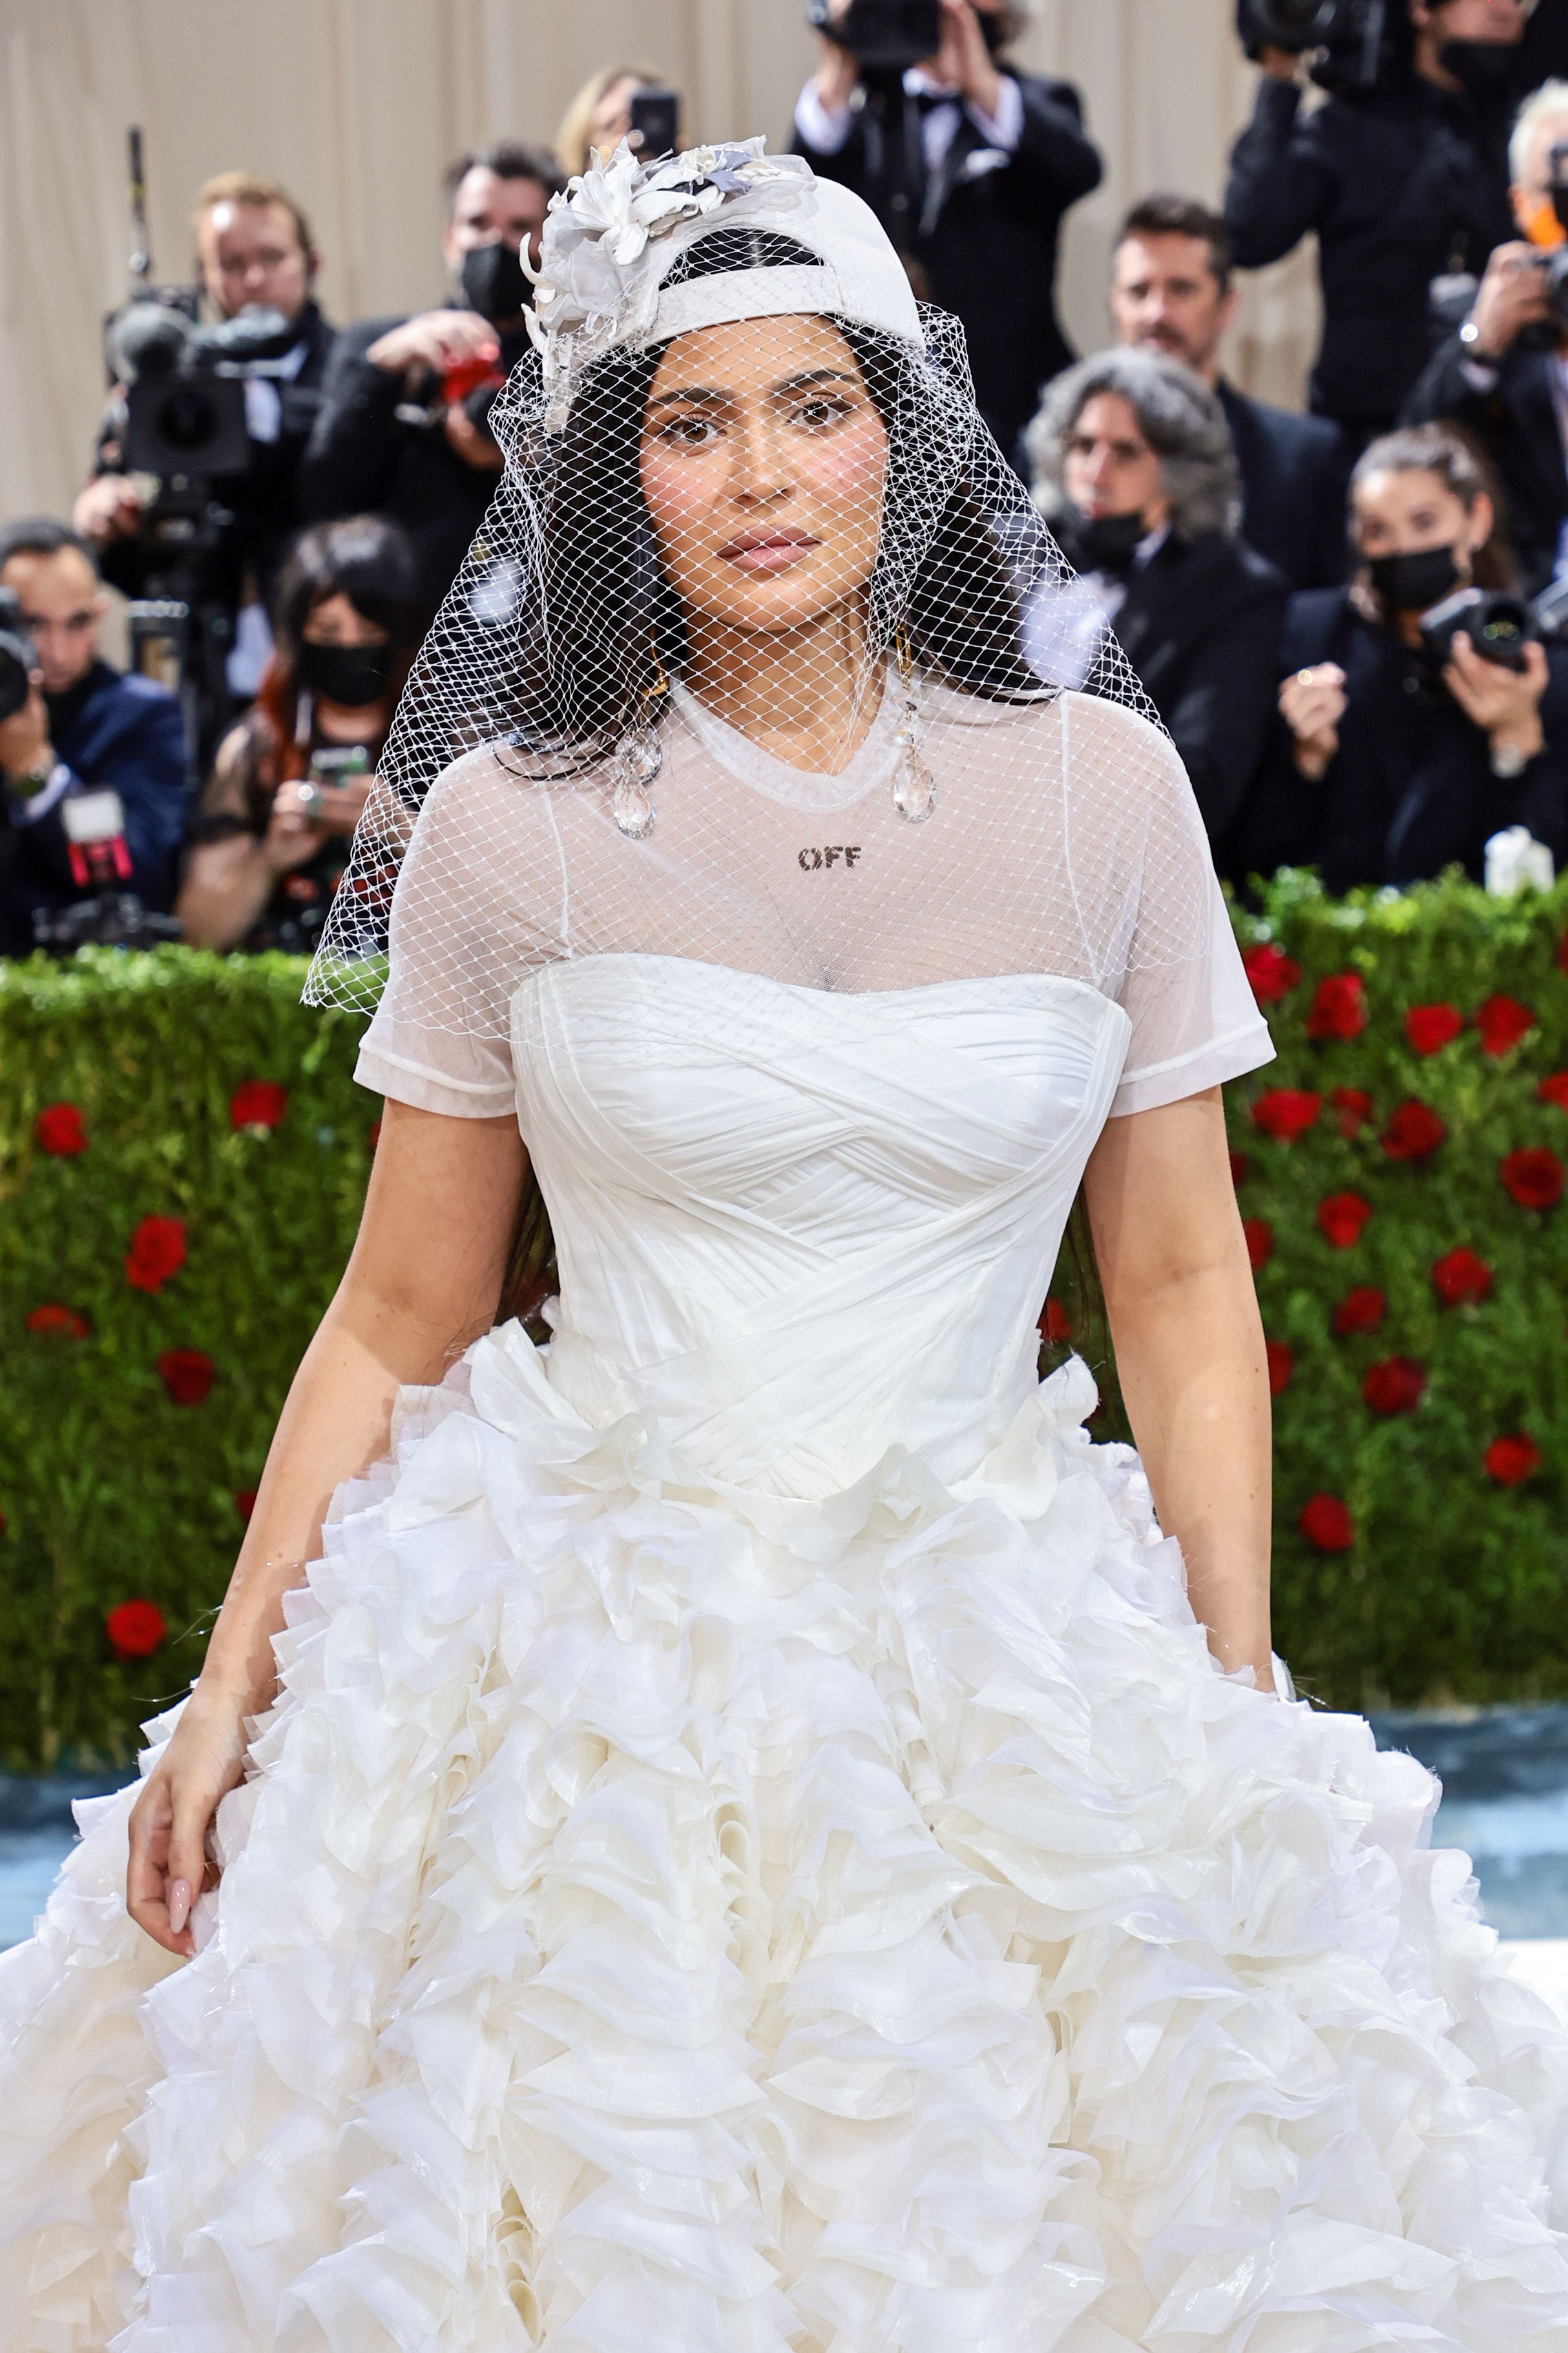 vis Walging Overleven Kylie Jenner Wears Bridal Off-White Dress at Met Gala 2022